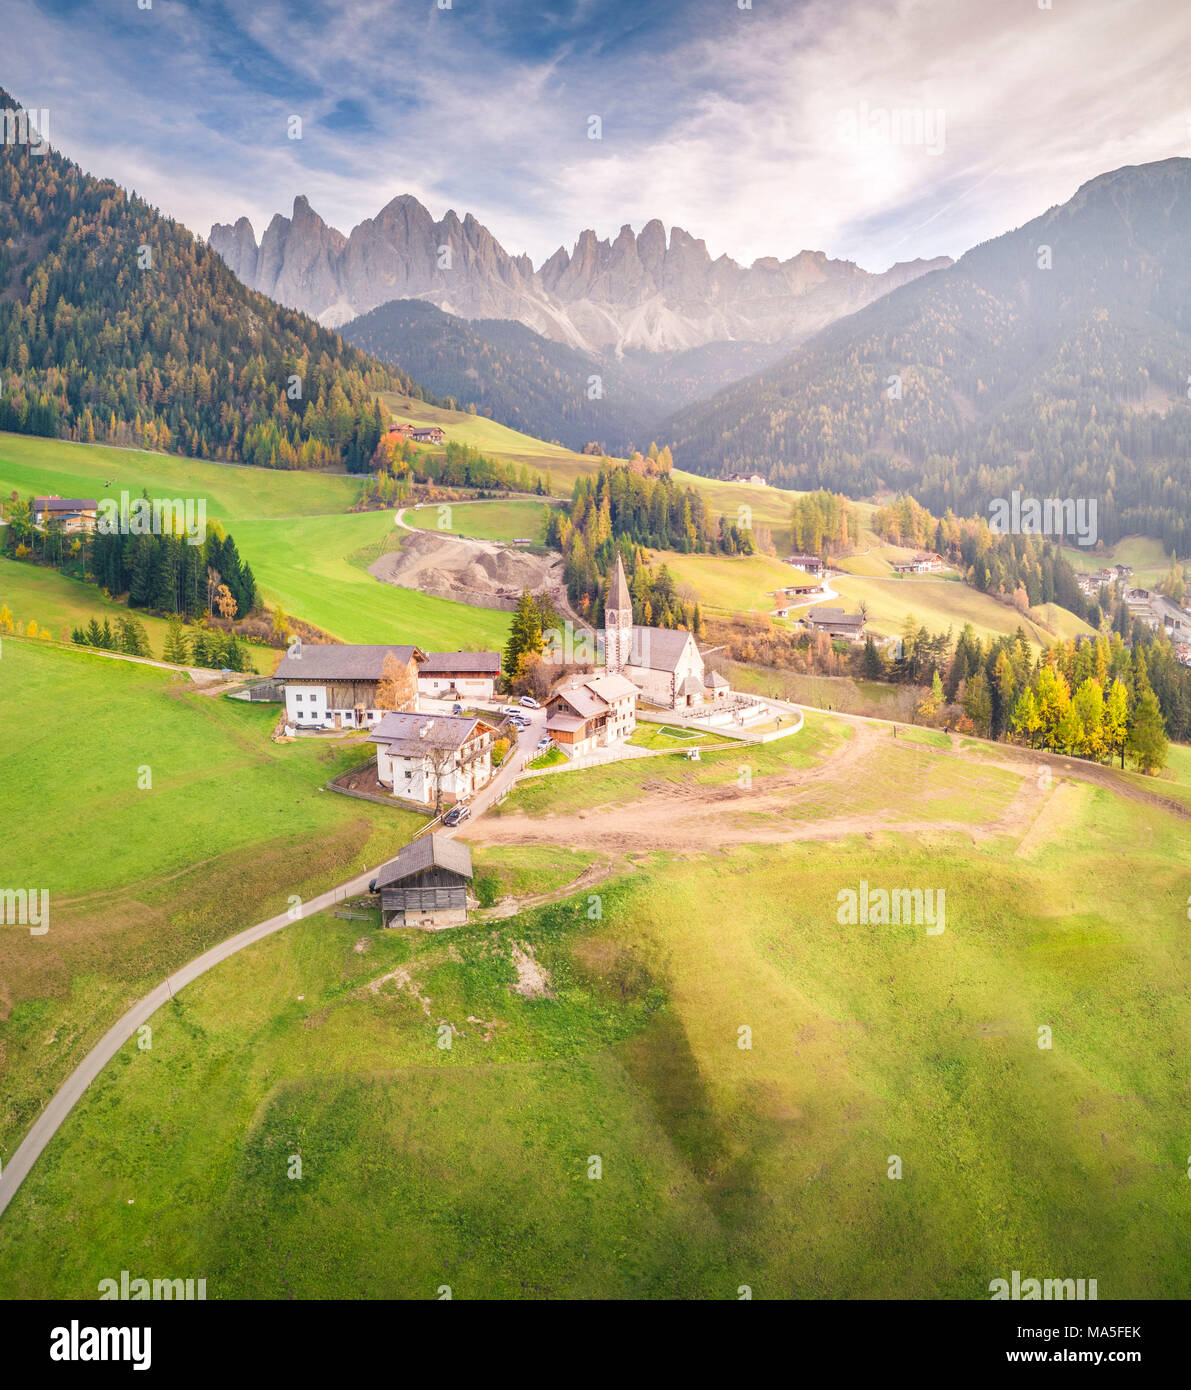 Vue aérienne du village de Santa Magdalena, Funes, vallée de la province de Bolzano, Trentin-Haut-Adige, Italie Banque D'Images